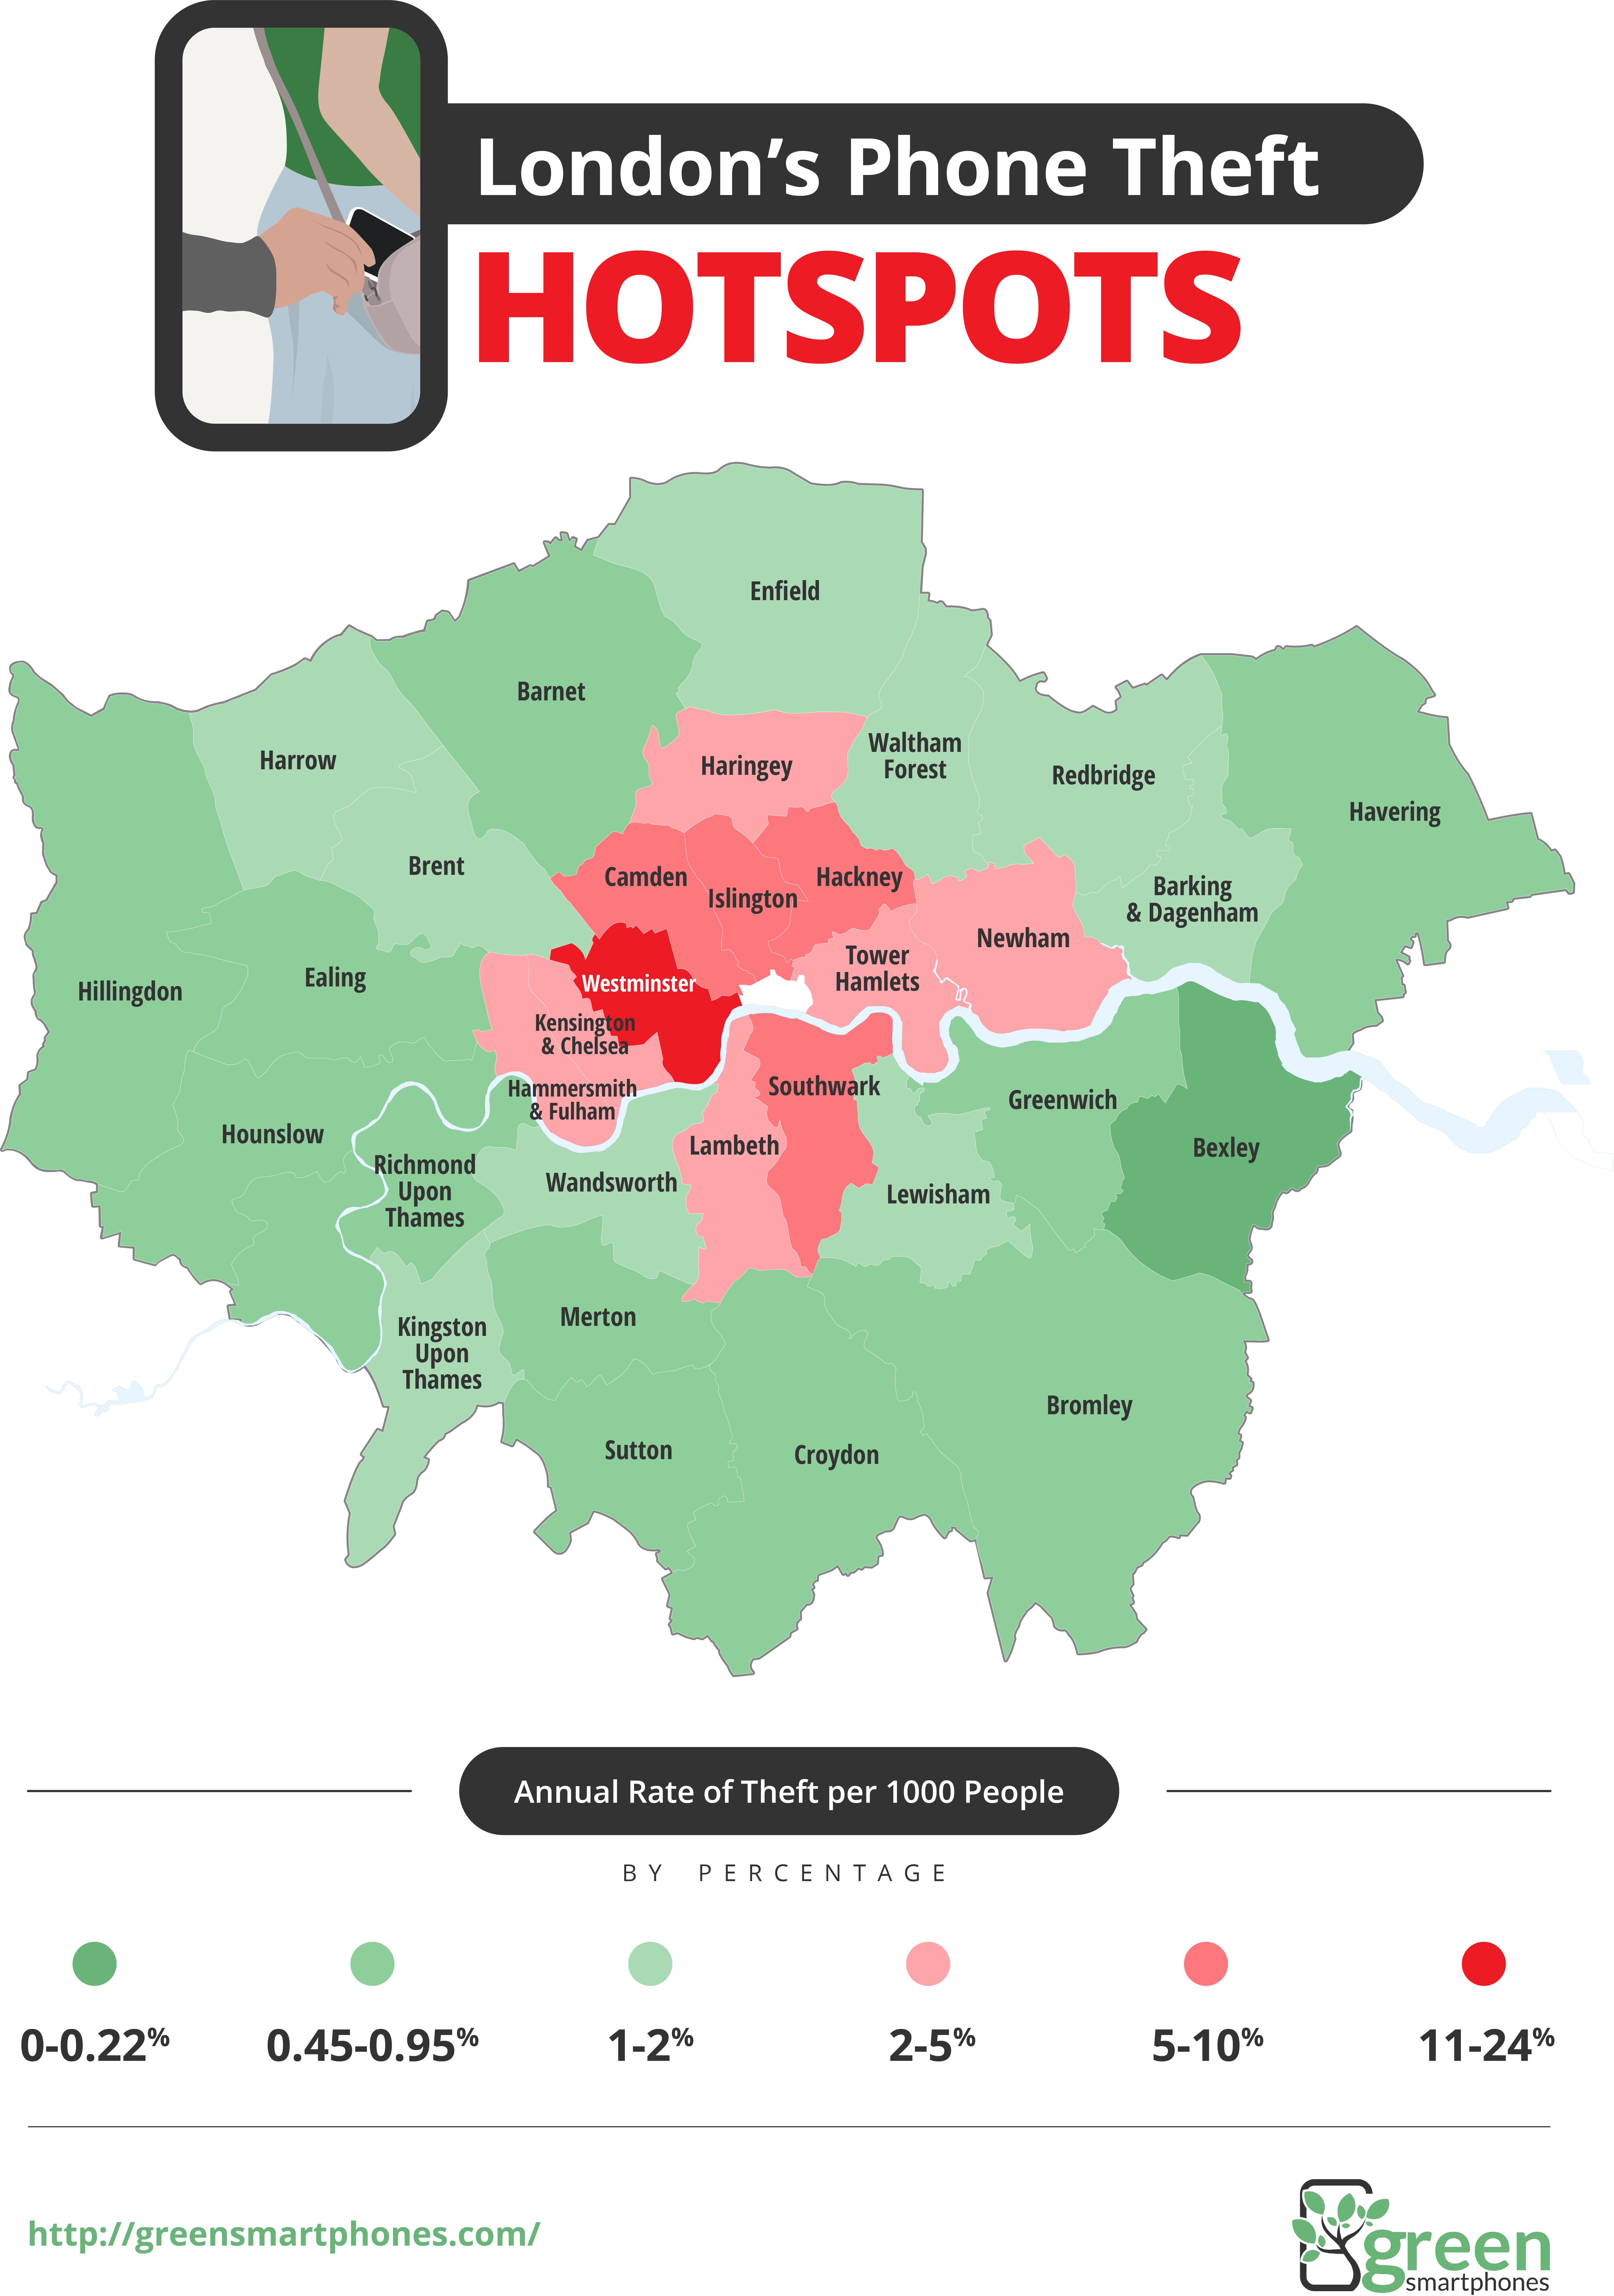 London phone theft hotspots diagram.